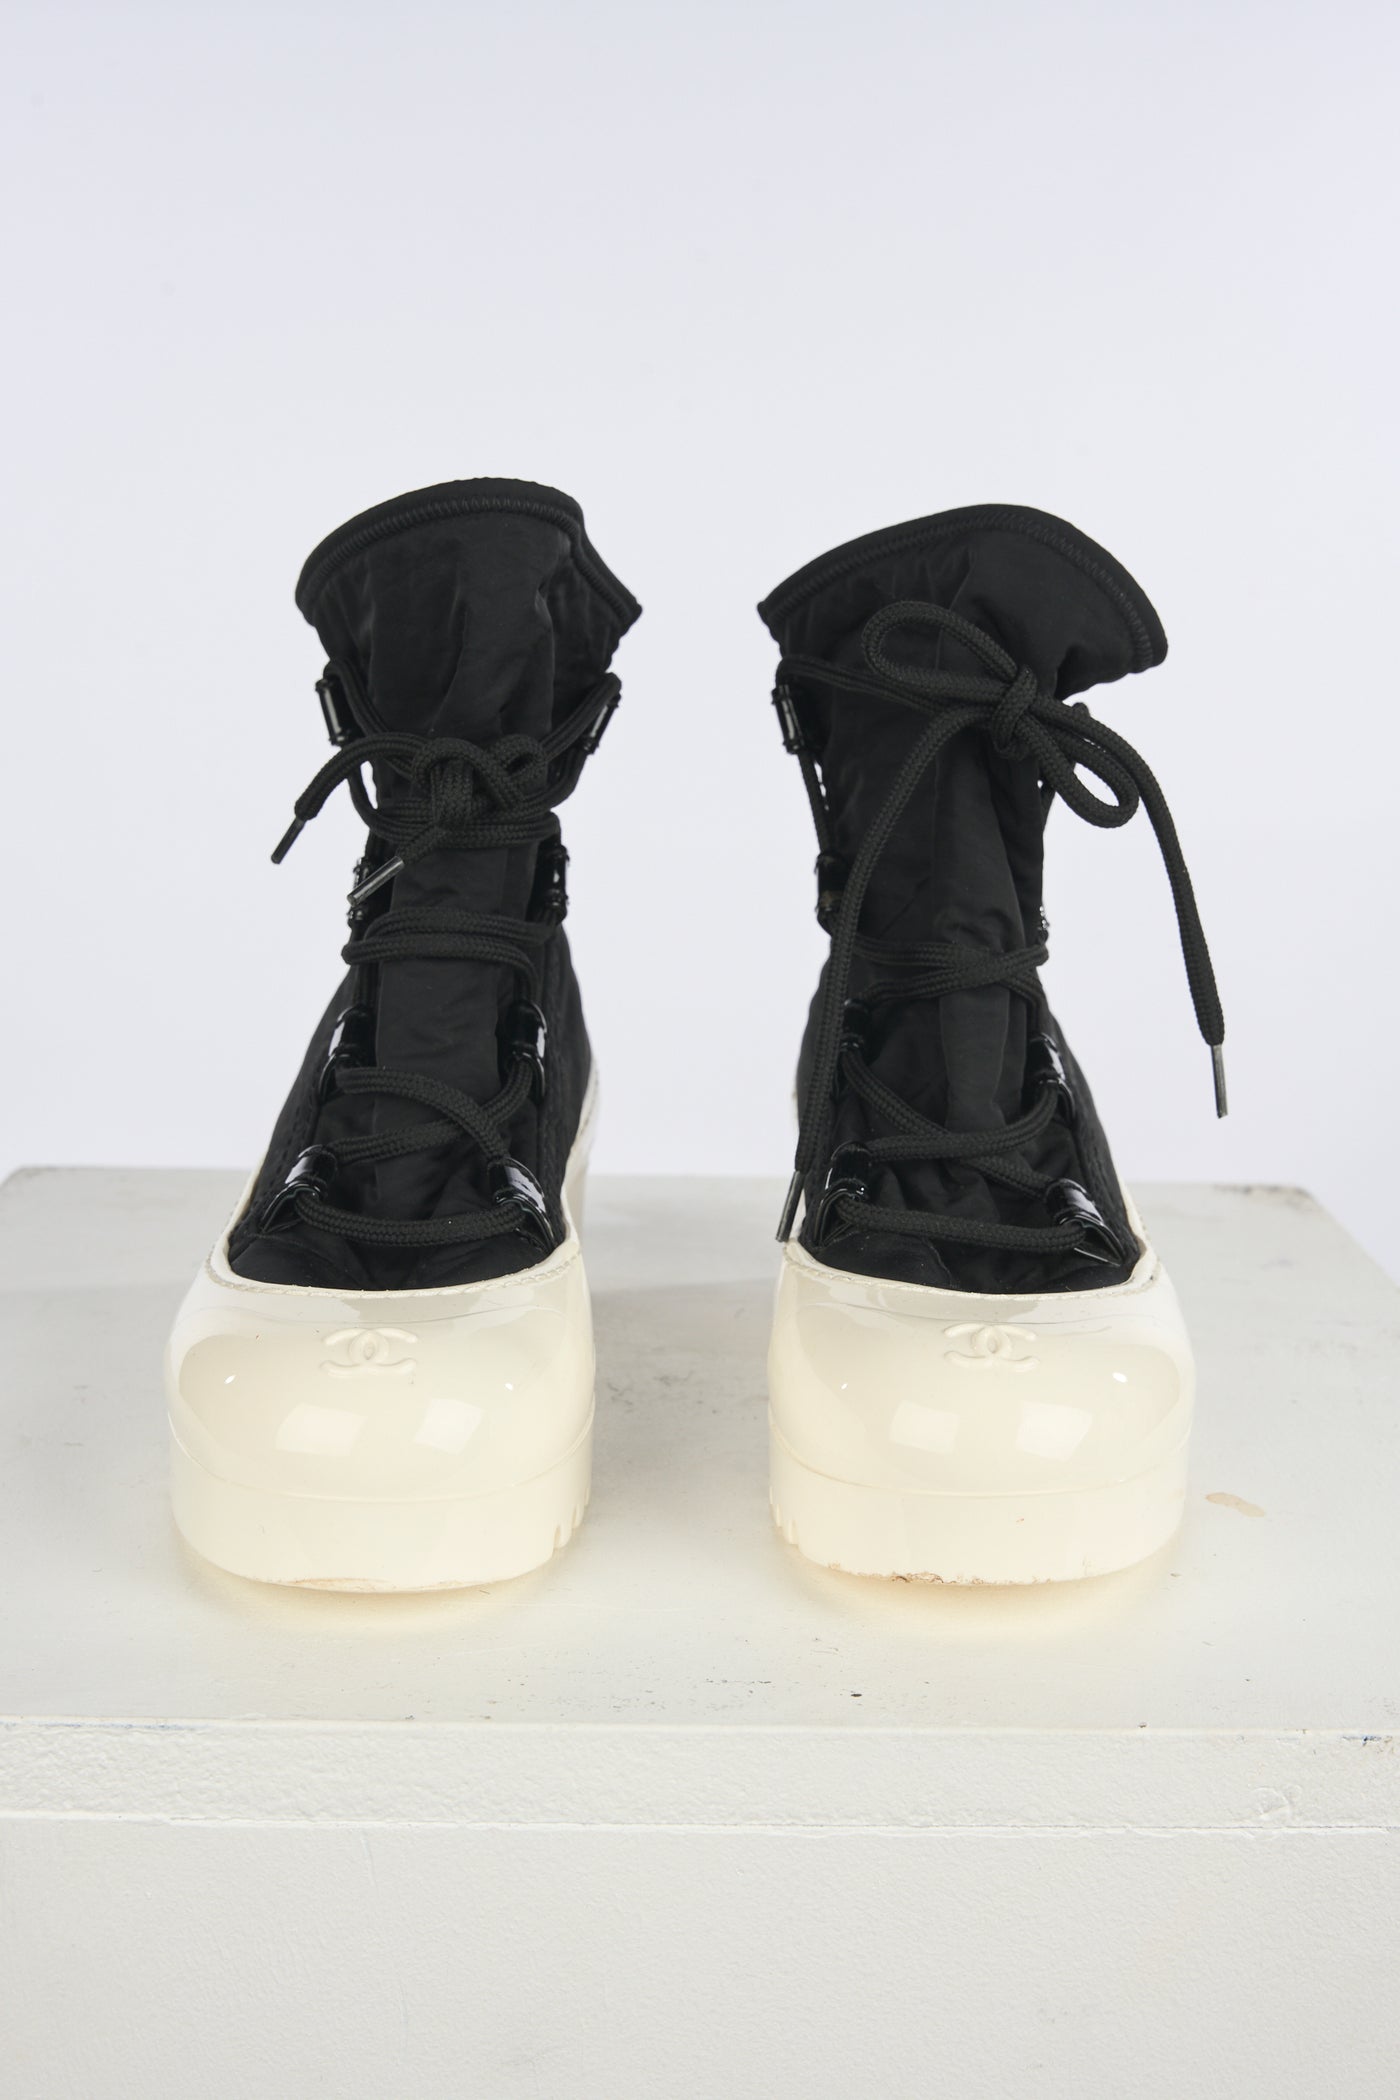 CHANEL 2019 collection après ski boots size 38